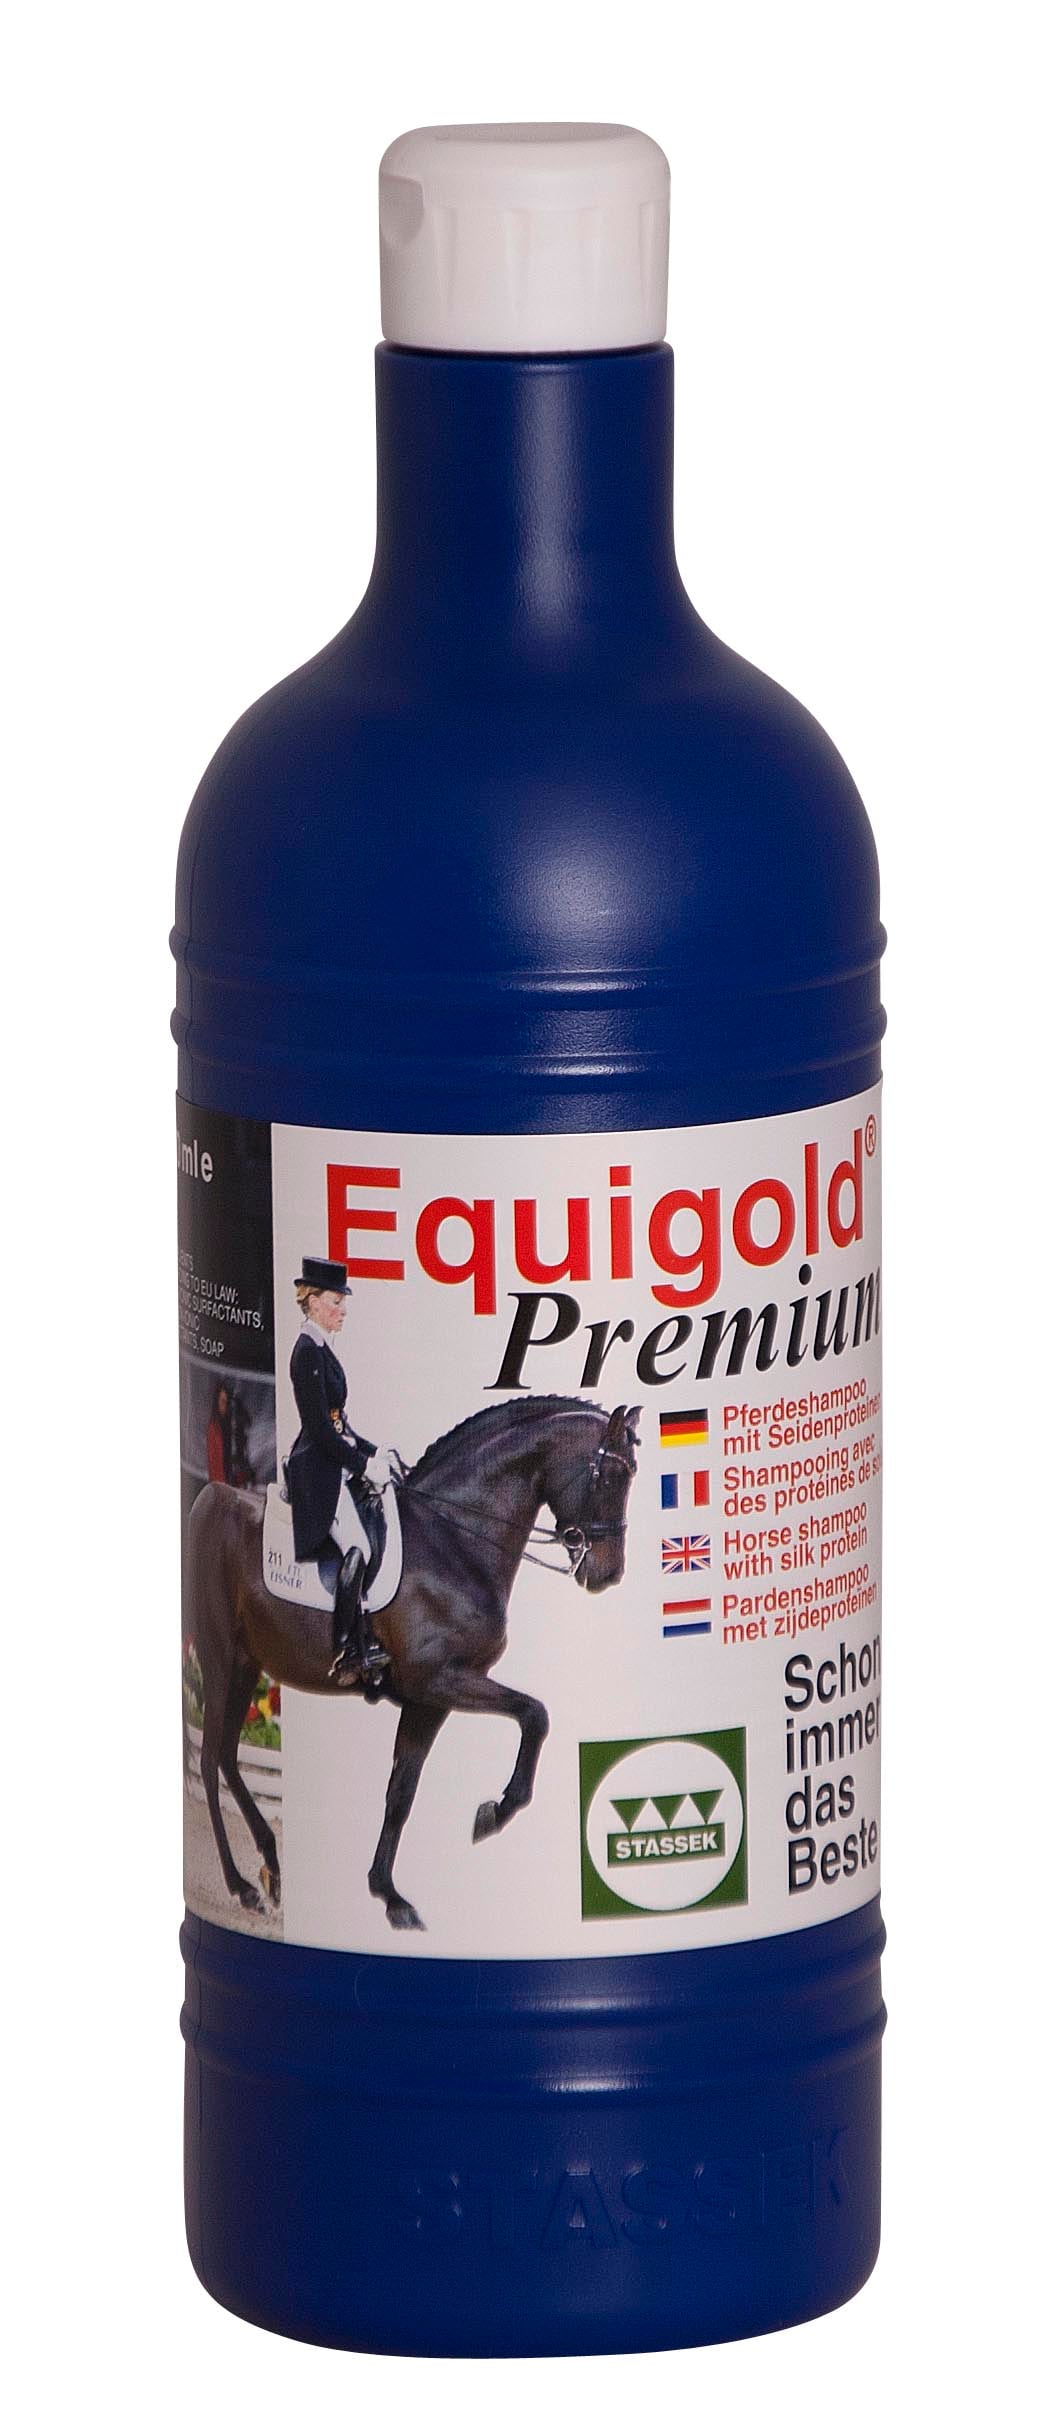 Equigold Premium Schampo från Stassek 750 ml